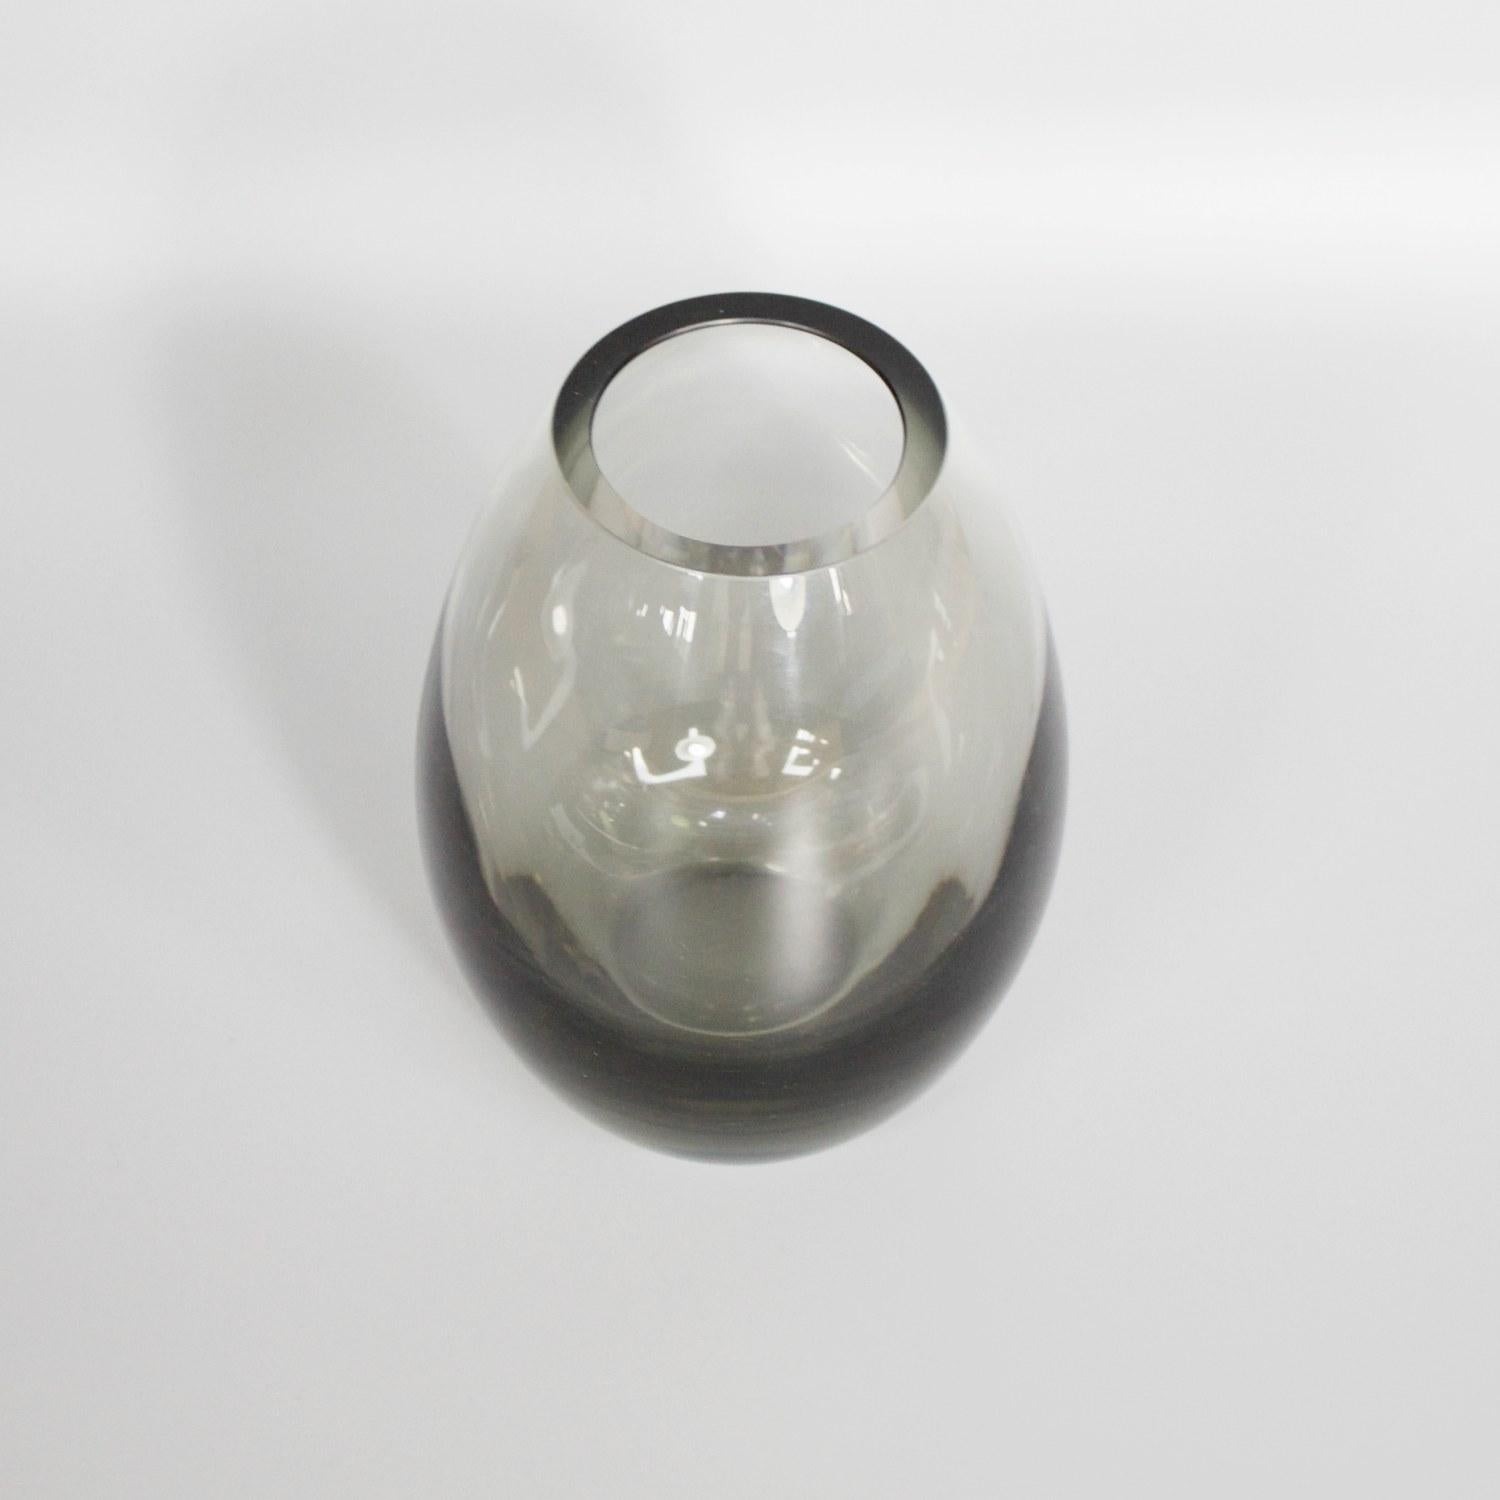 A clear and black glass vase by Danish glassmaker Per Lütken for Holmegaard Glassworks. Signed and Dated 1961.

Dimensions: H 16cm D at top 7.5cm

Origin: Danish

Date: 1961

Holmegaard Glassworks is located in the town of Fensmark,